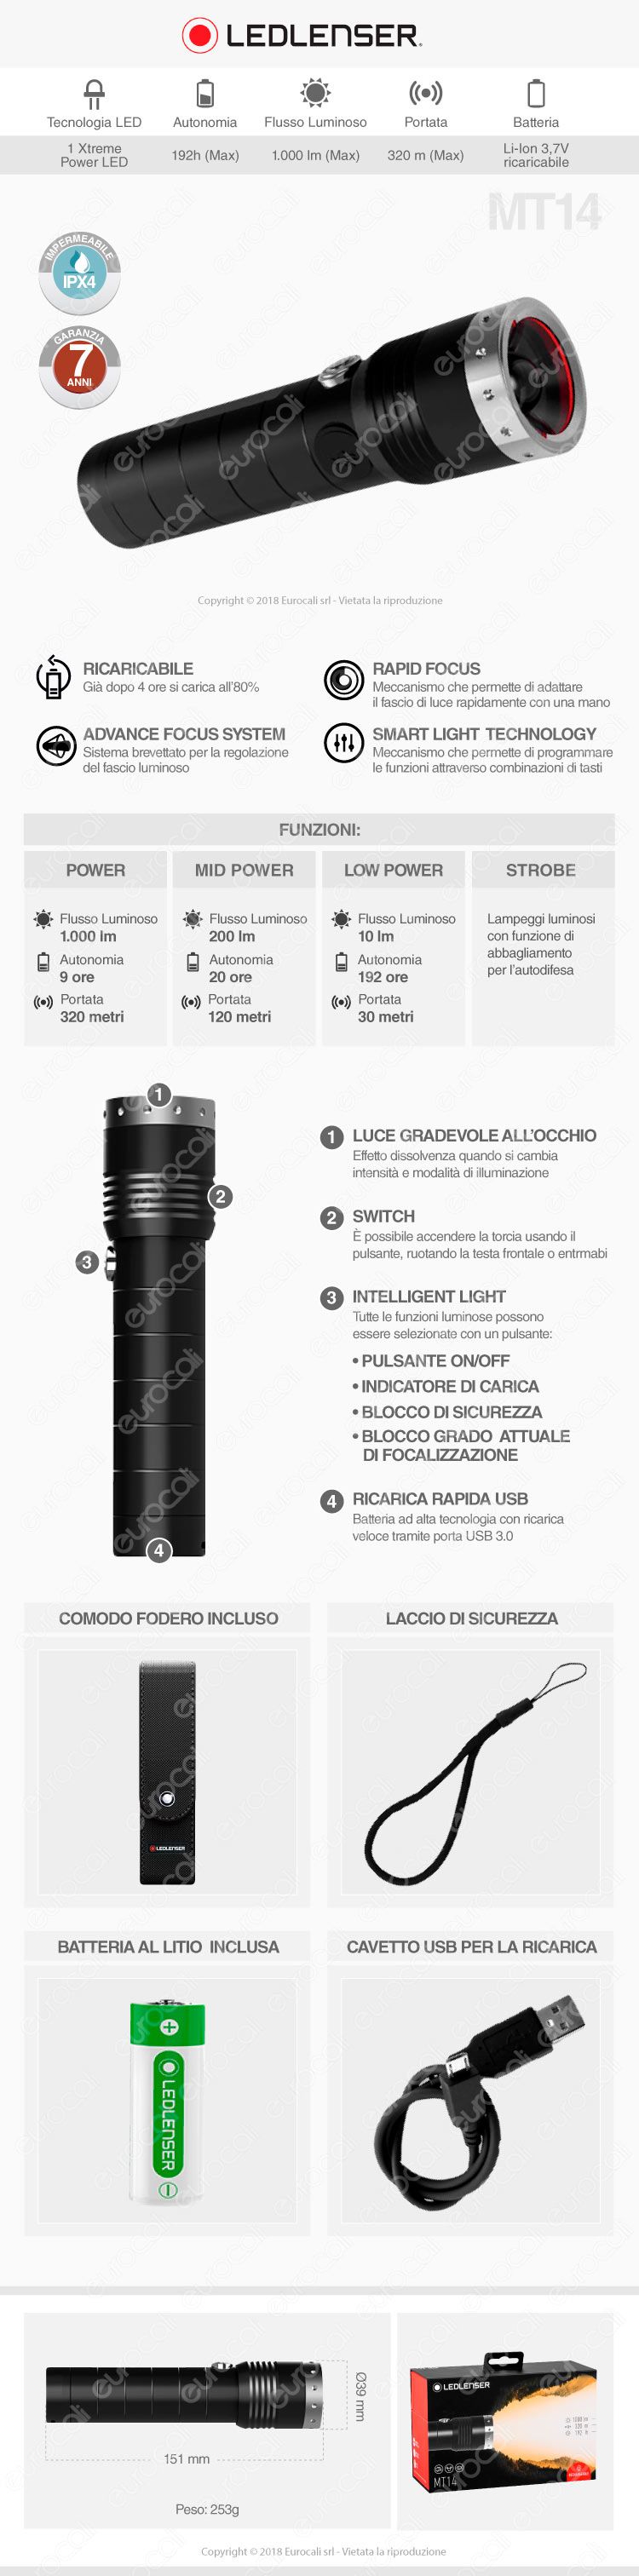 Torcia LED Professionale Ricaricabile in Alluminio Ledlenser MT14